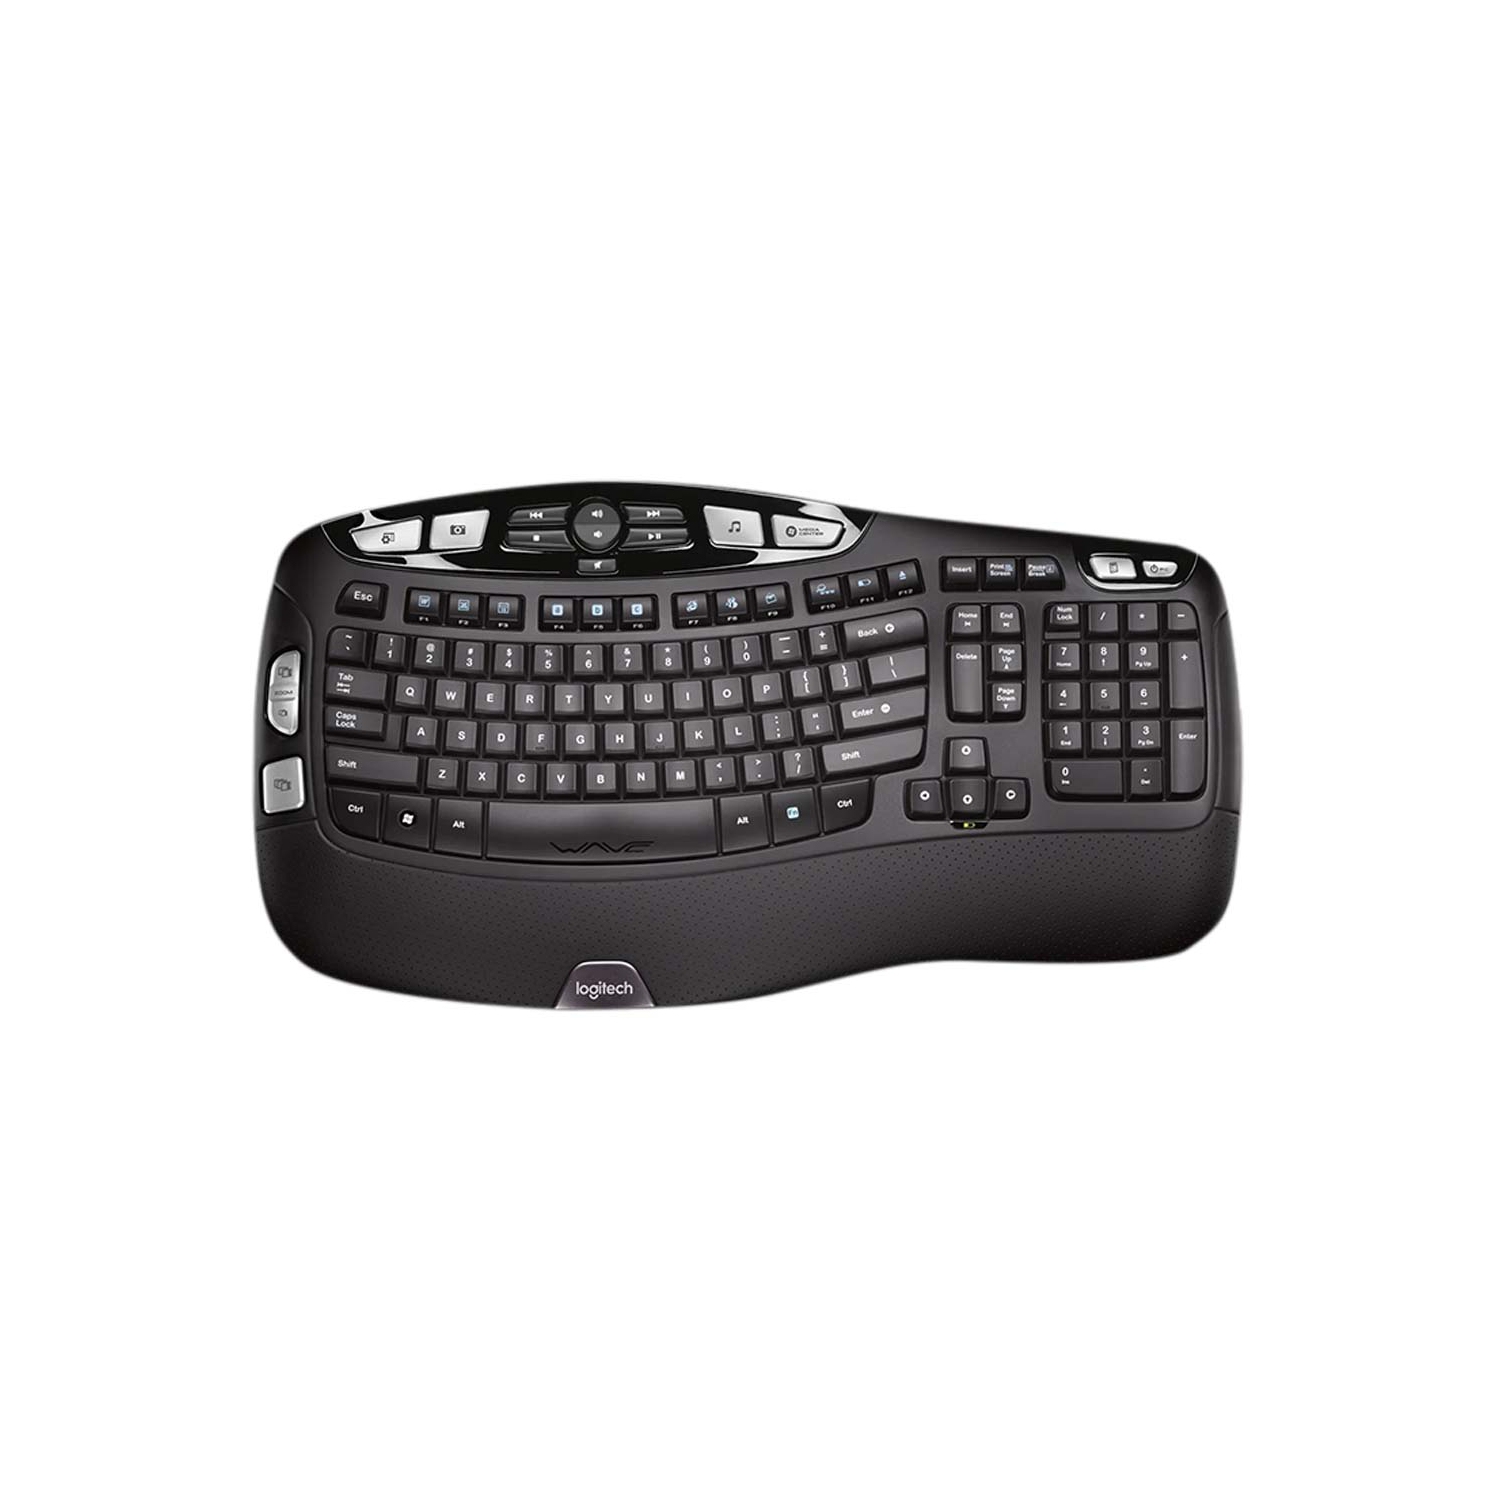 Logitech Wireless Keyboard K350 - keyboard - English - 920-001996